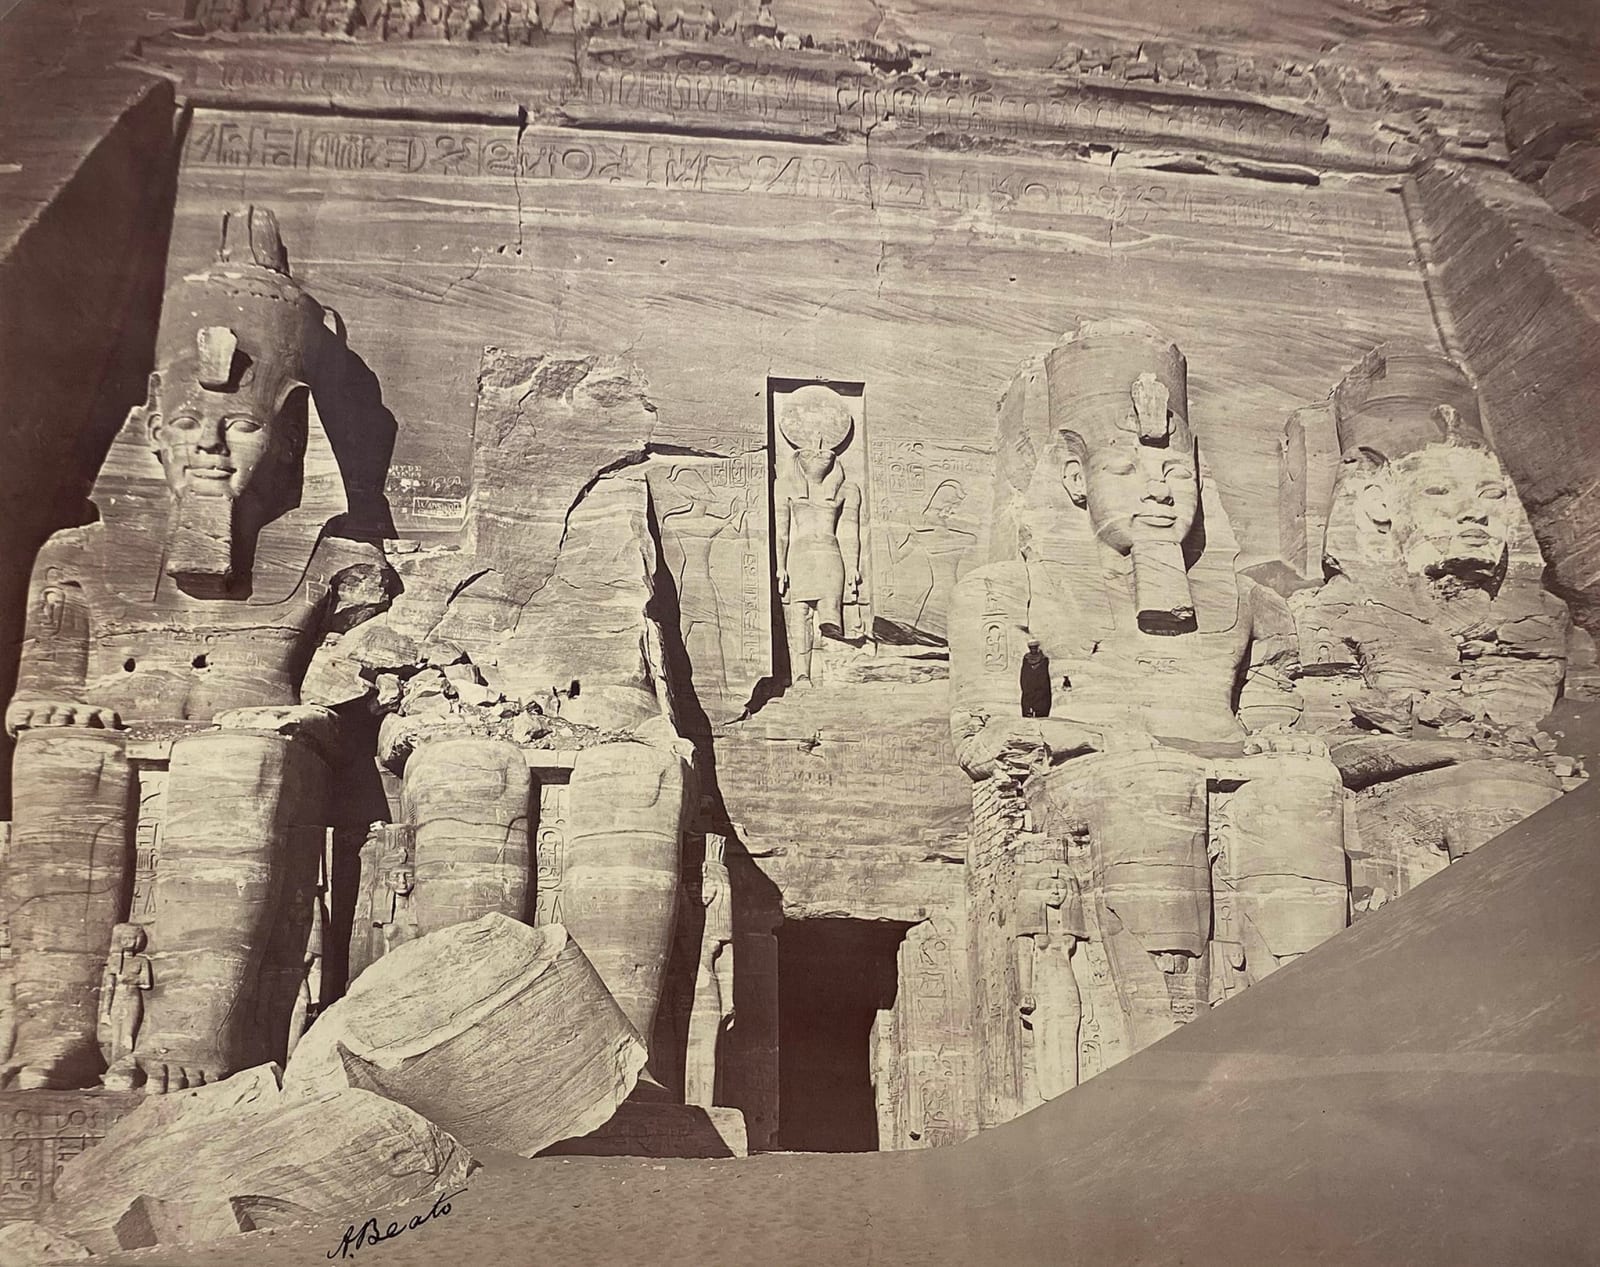 Antonio Beato, Abu Simbel, Egypt (Façade), c. 1887